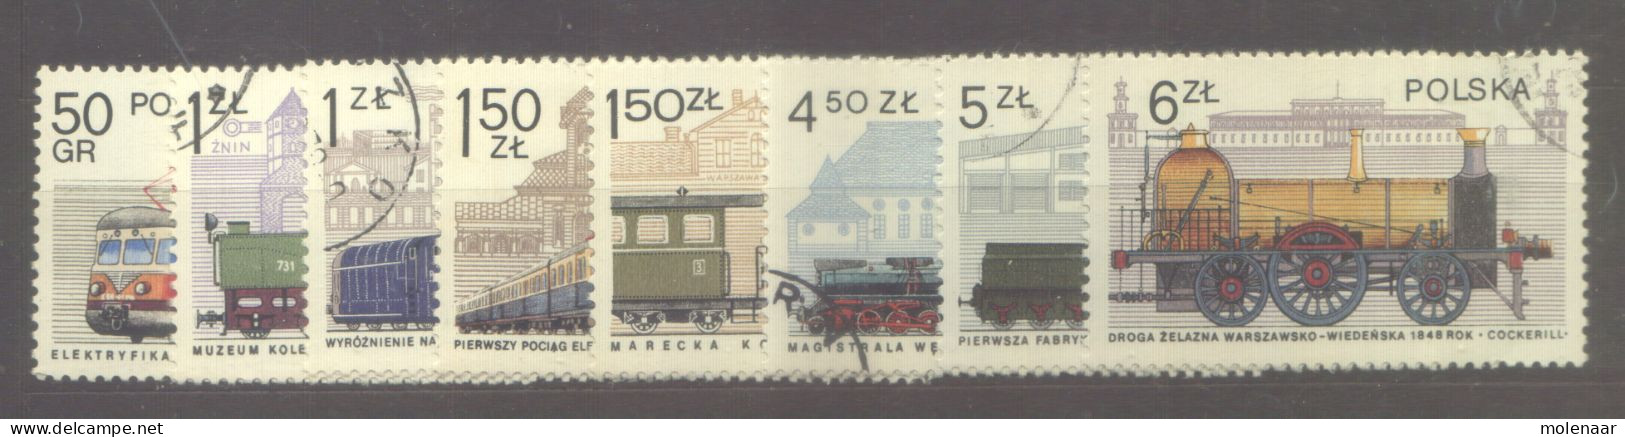 Postzegels > Europa > Polen > 1944-.... Republiek > 1971-80 > Gebruikt No. 2540-2547  (24152) - Gebraucht